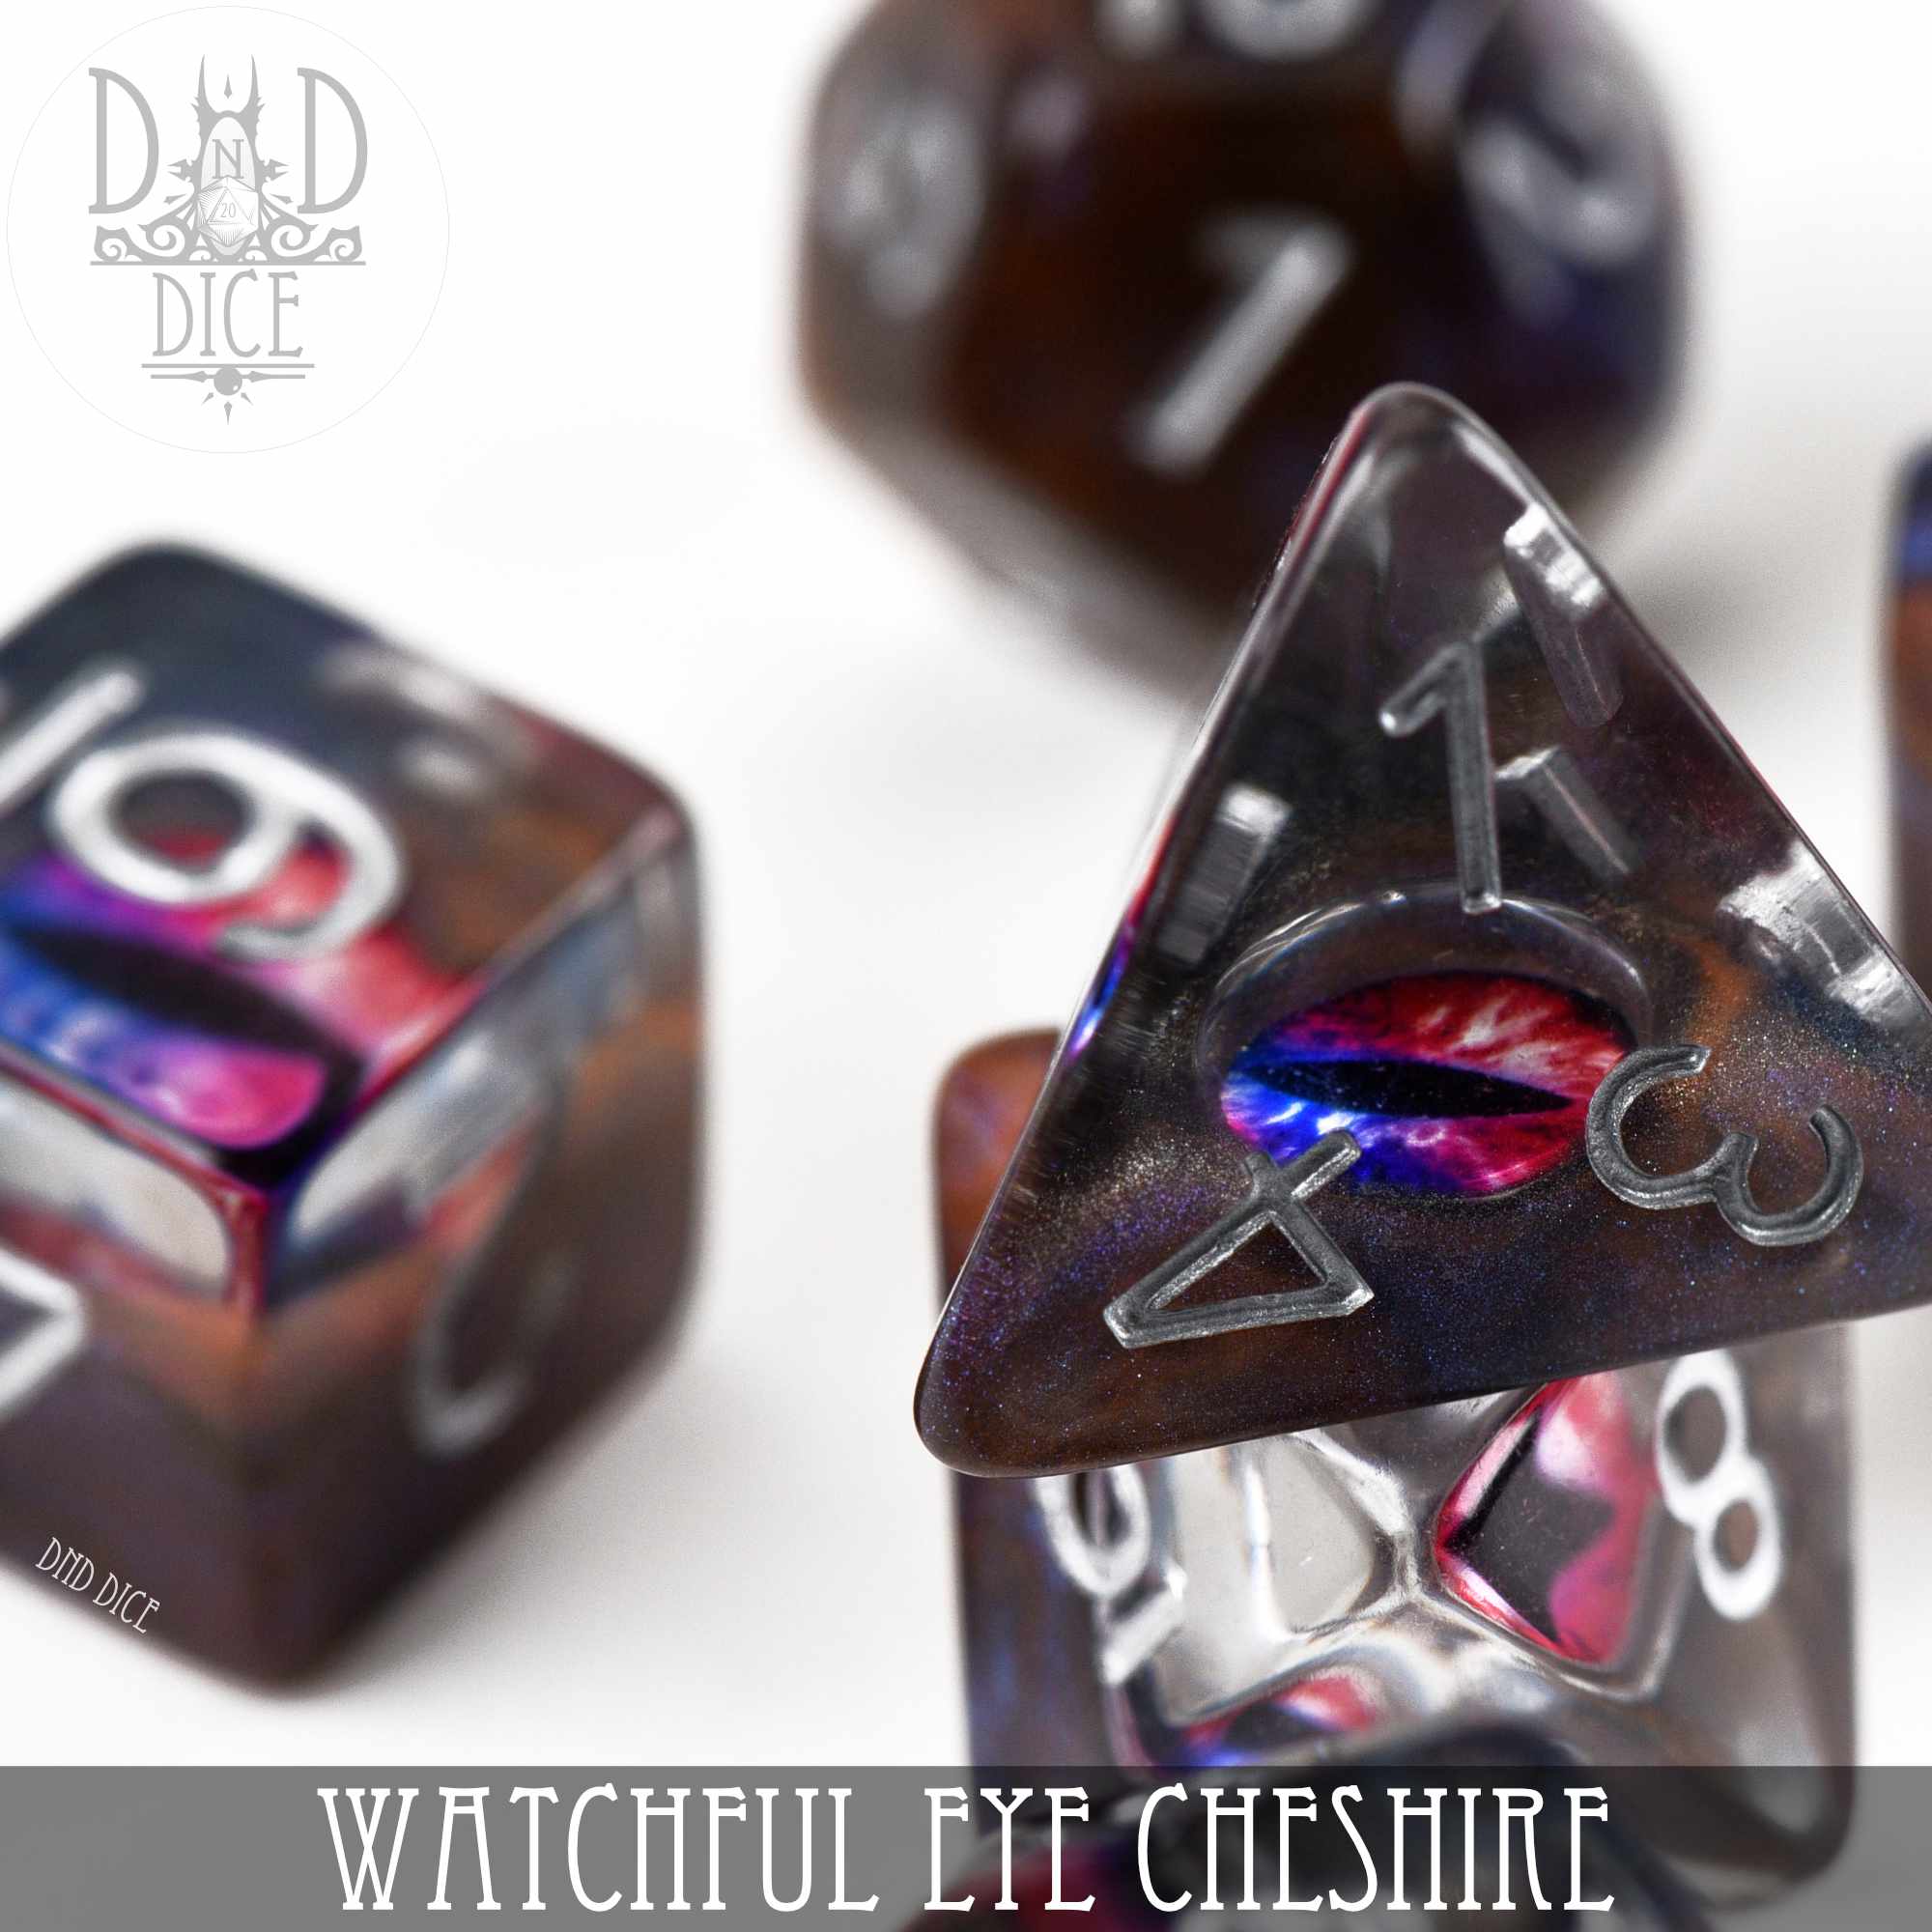 Watchful Eye - Cheshire